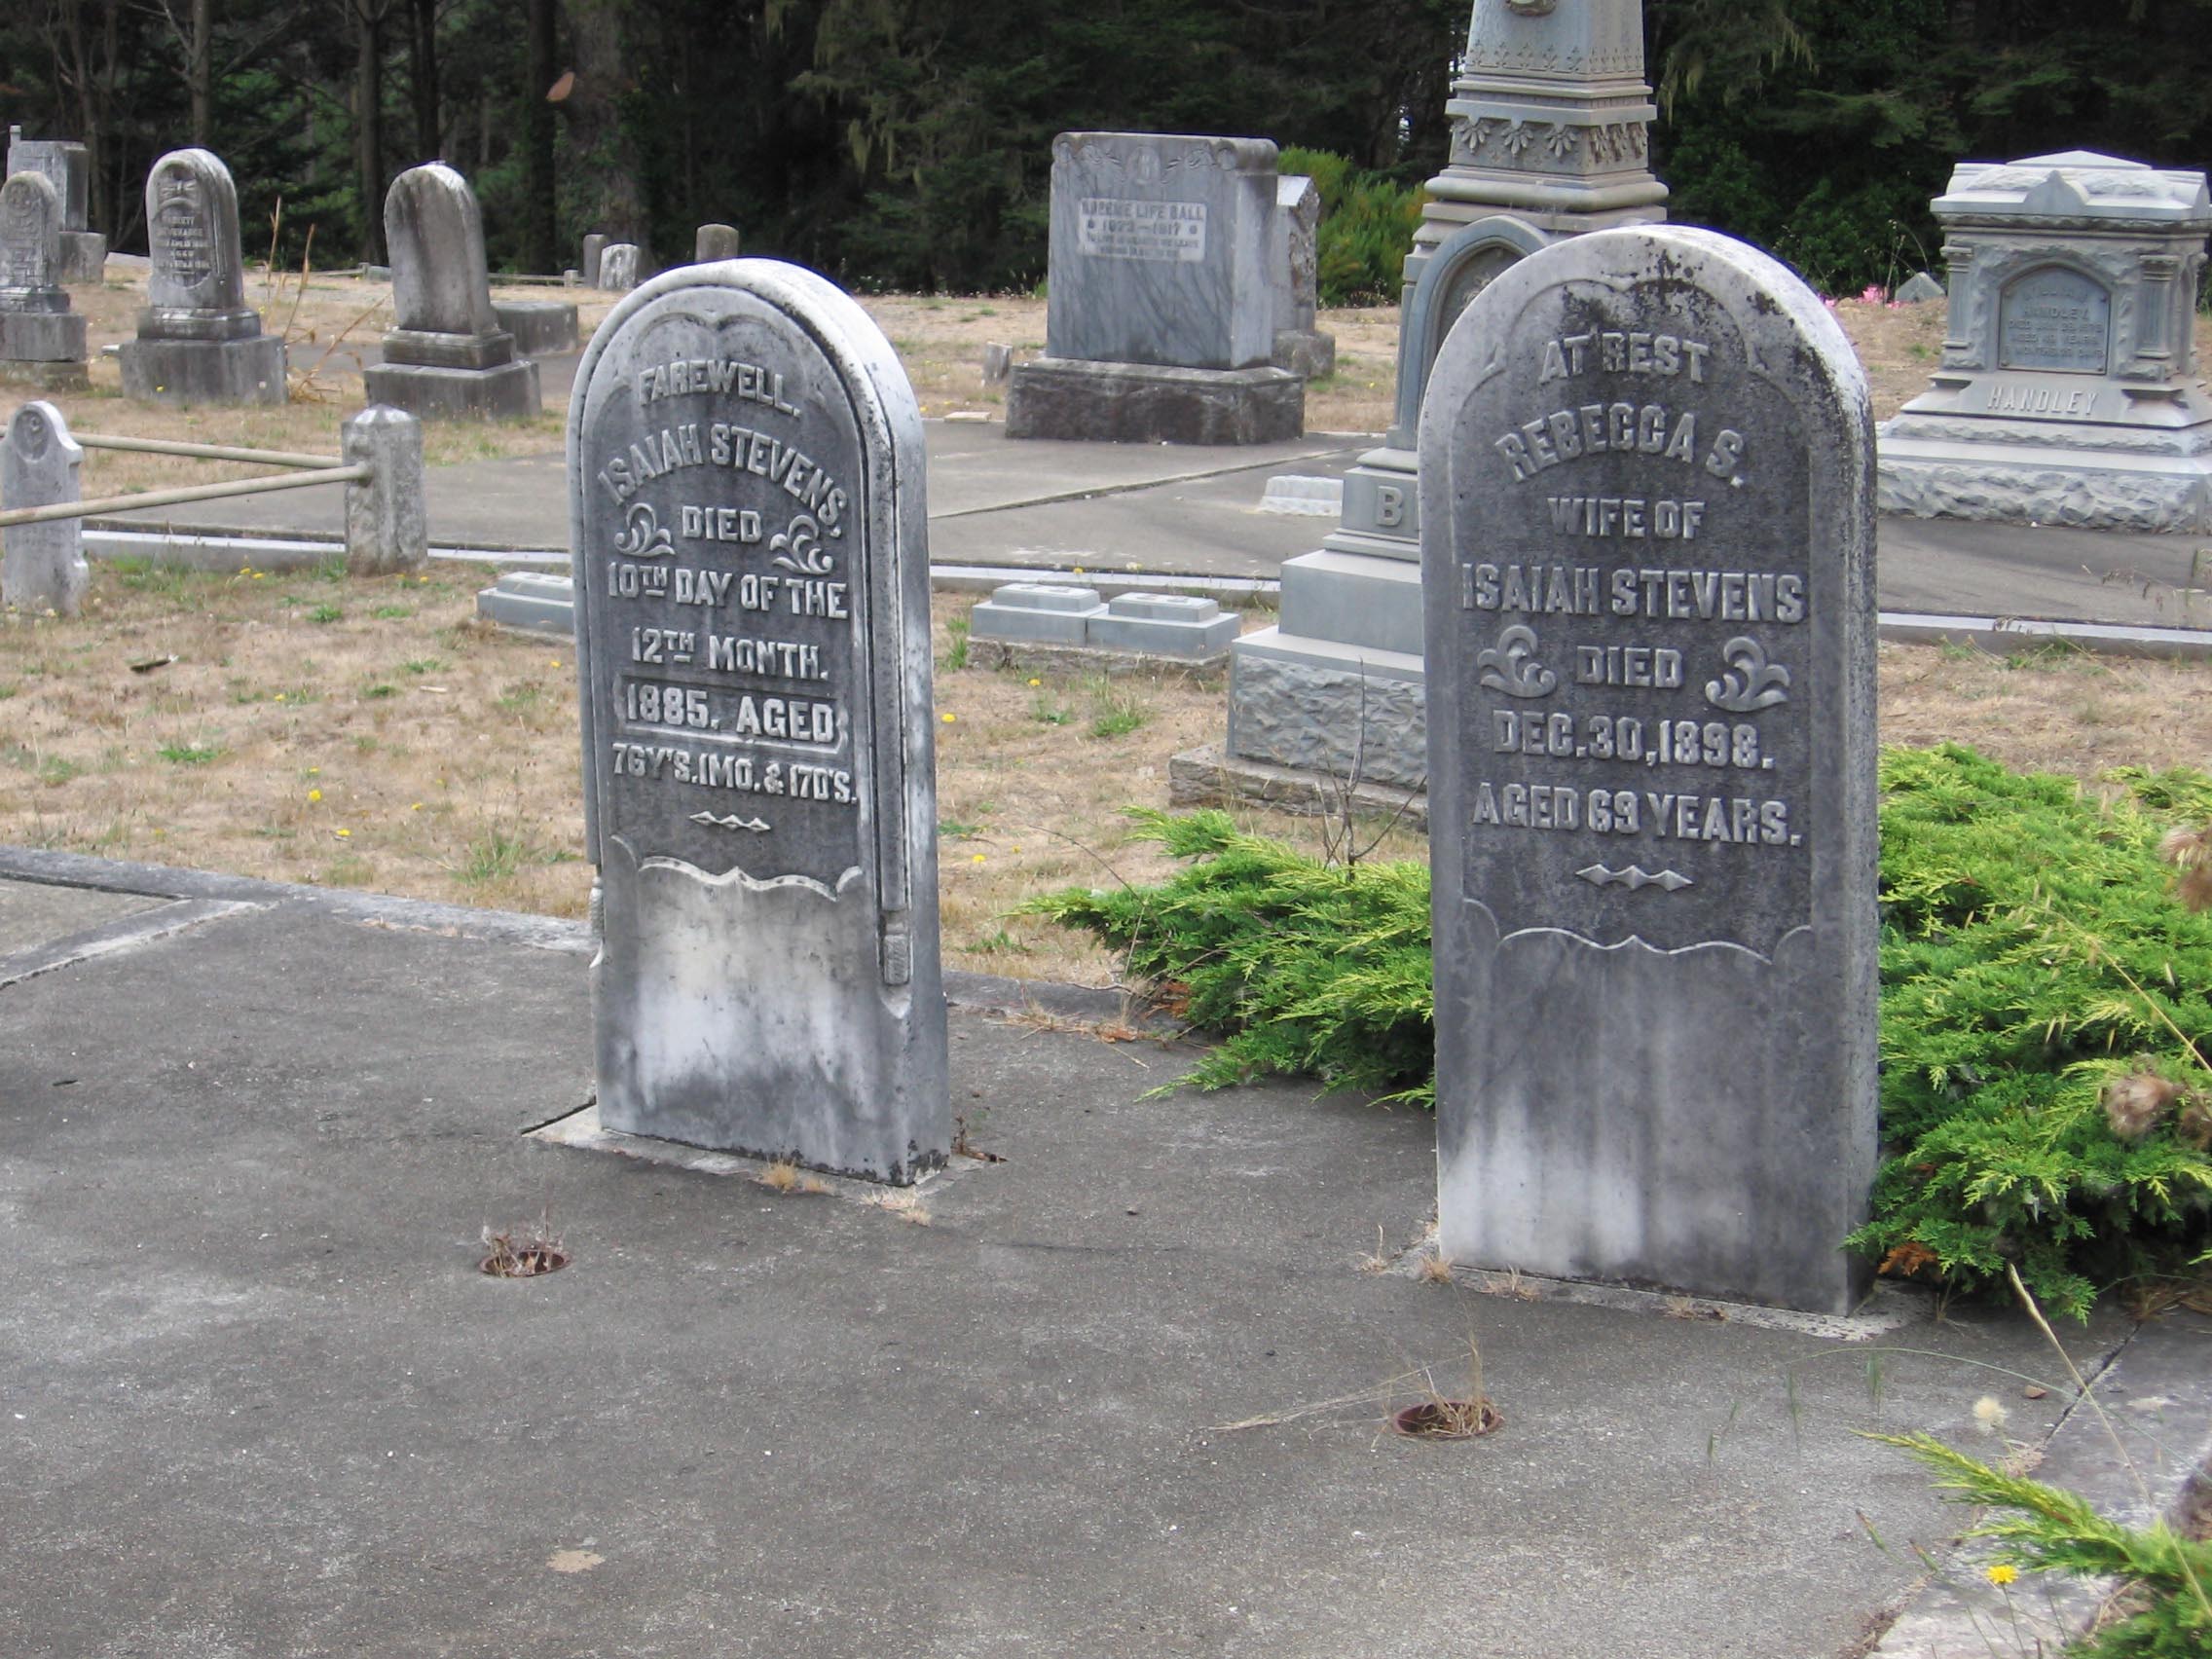 Isaiah_and_Rebecca_Stevens_LRIC_cemetery2.jpg